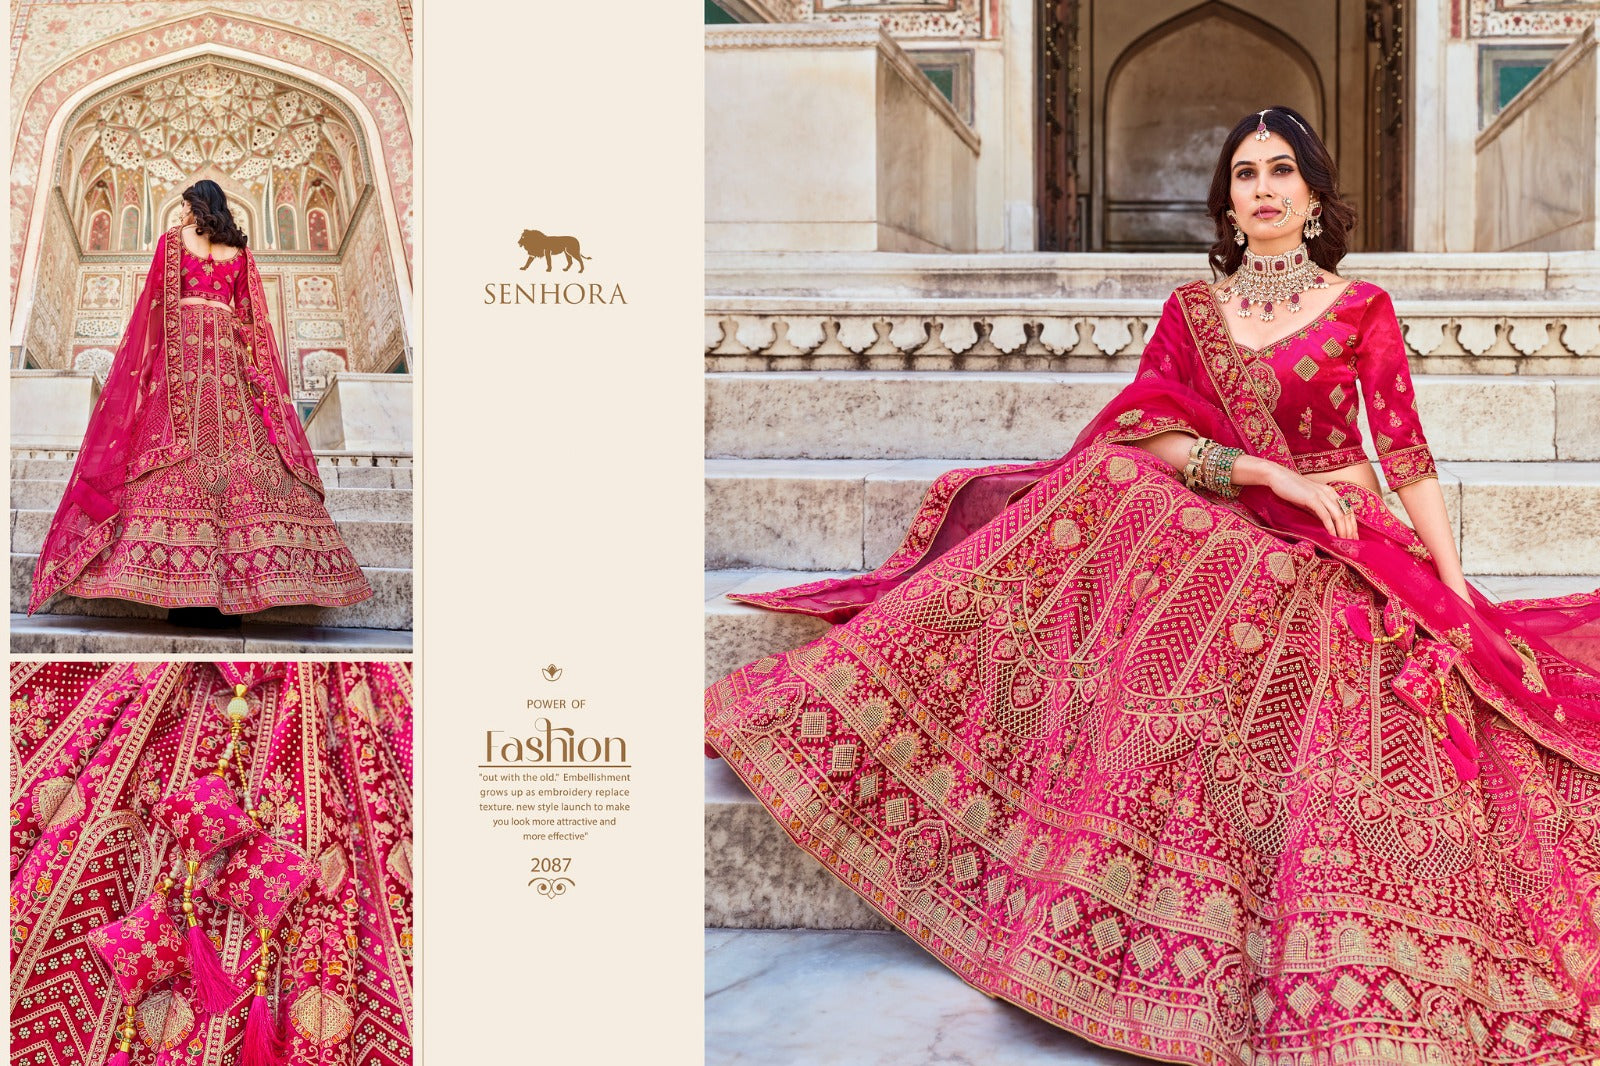 New Heavy Designer Semi-Stitched Bridal Lehenga at Rs 5550 in Surat